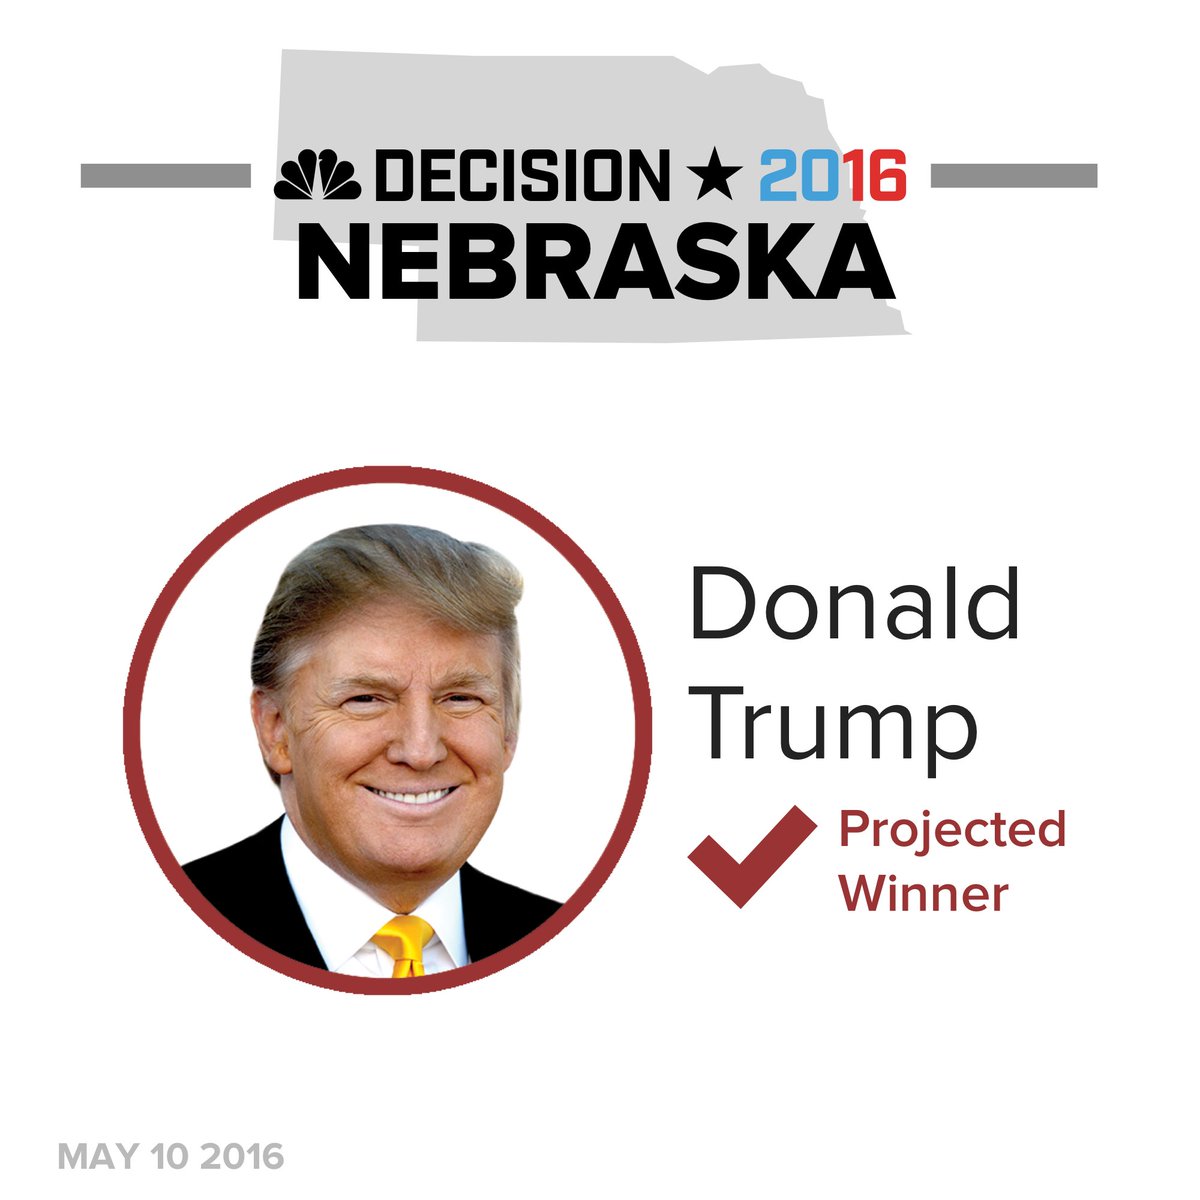 Trump wins Nebraska - despite rumors Cruz might win